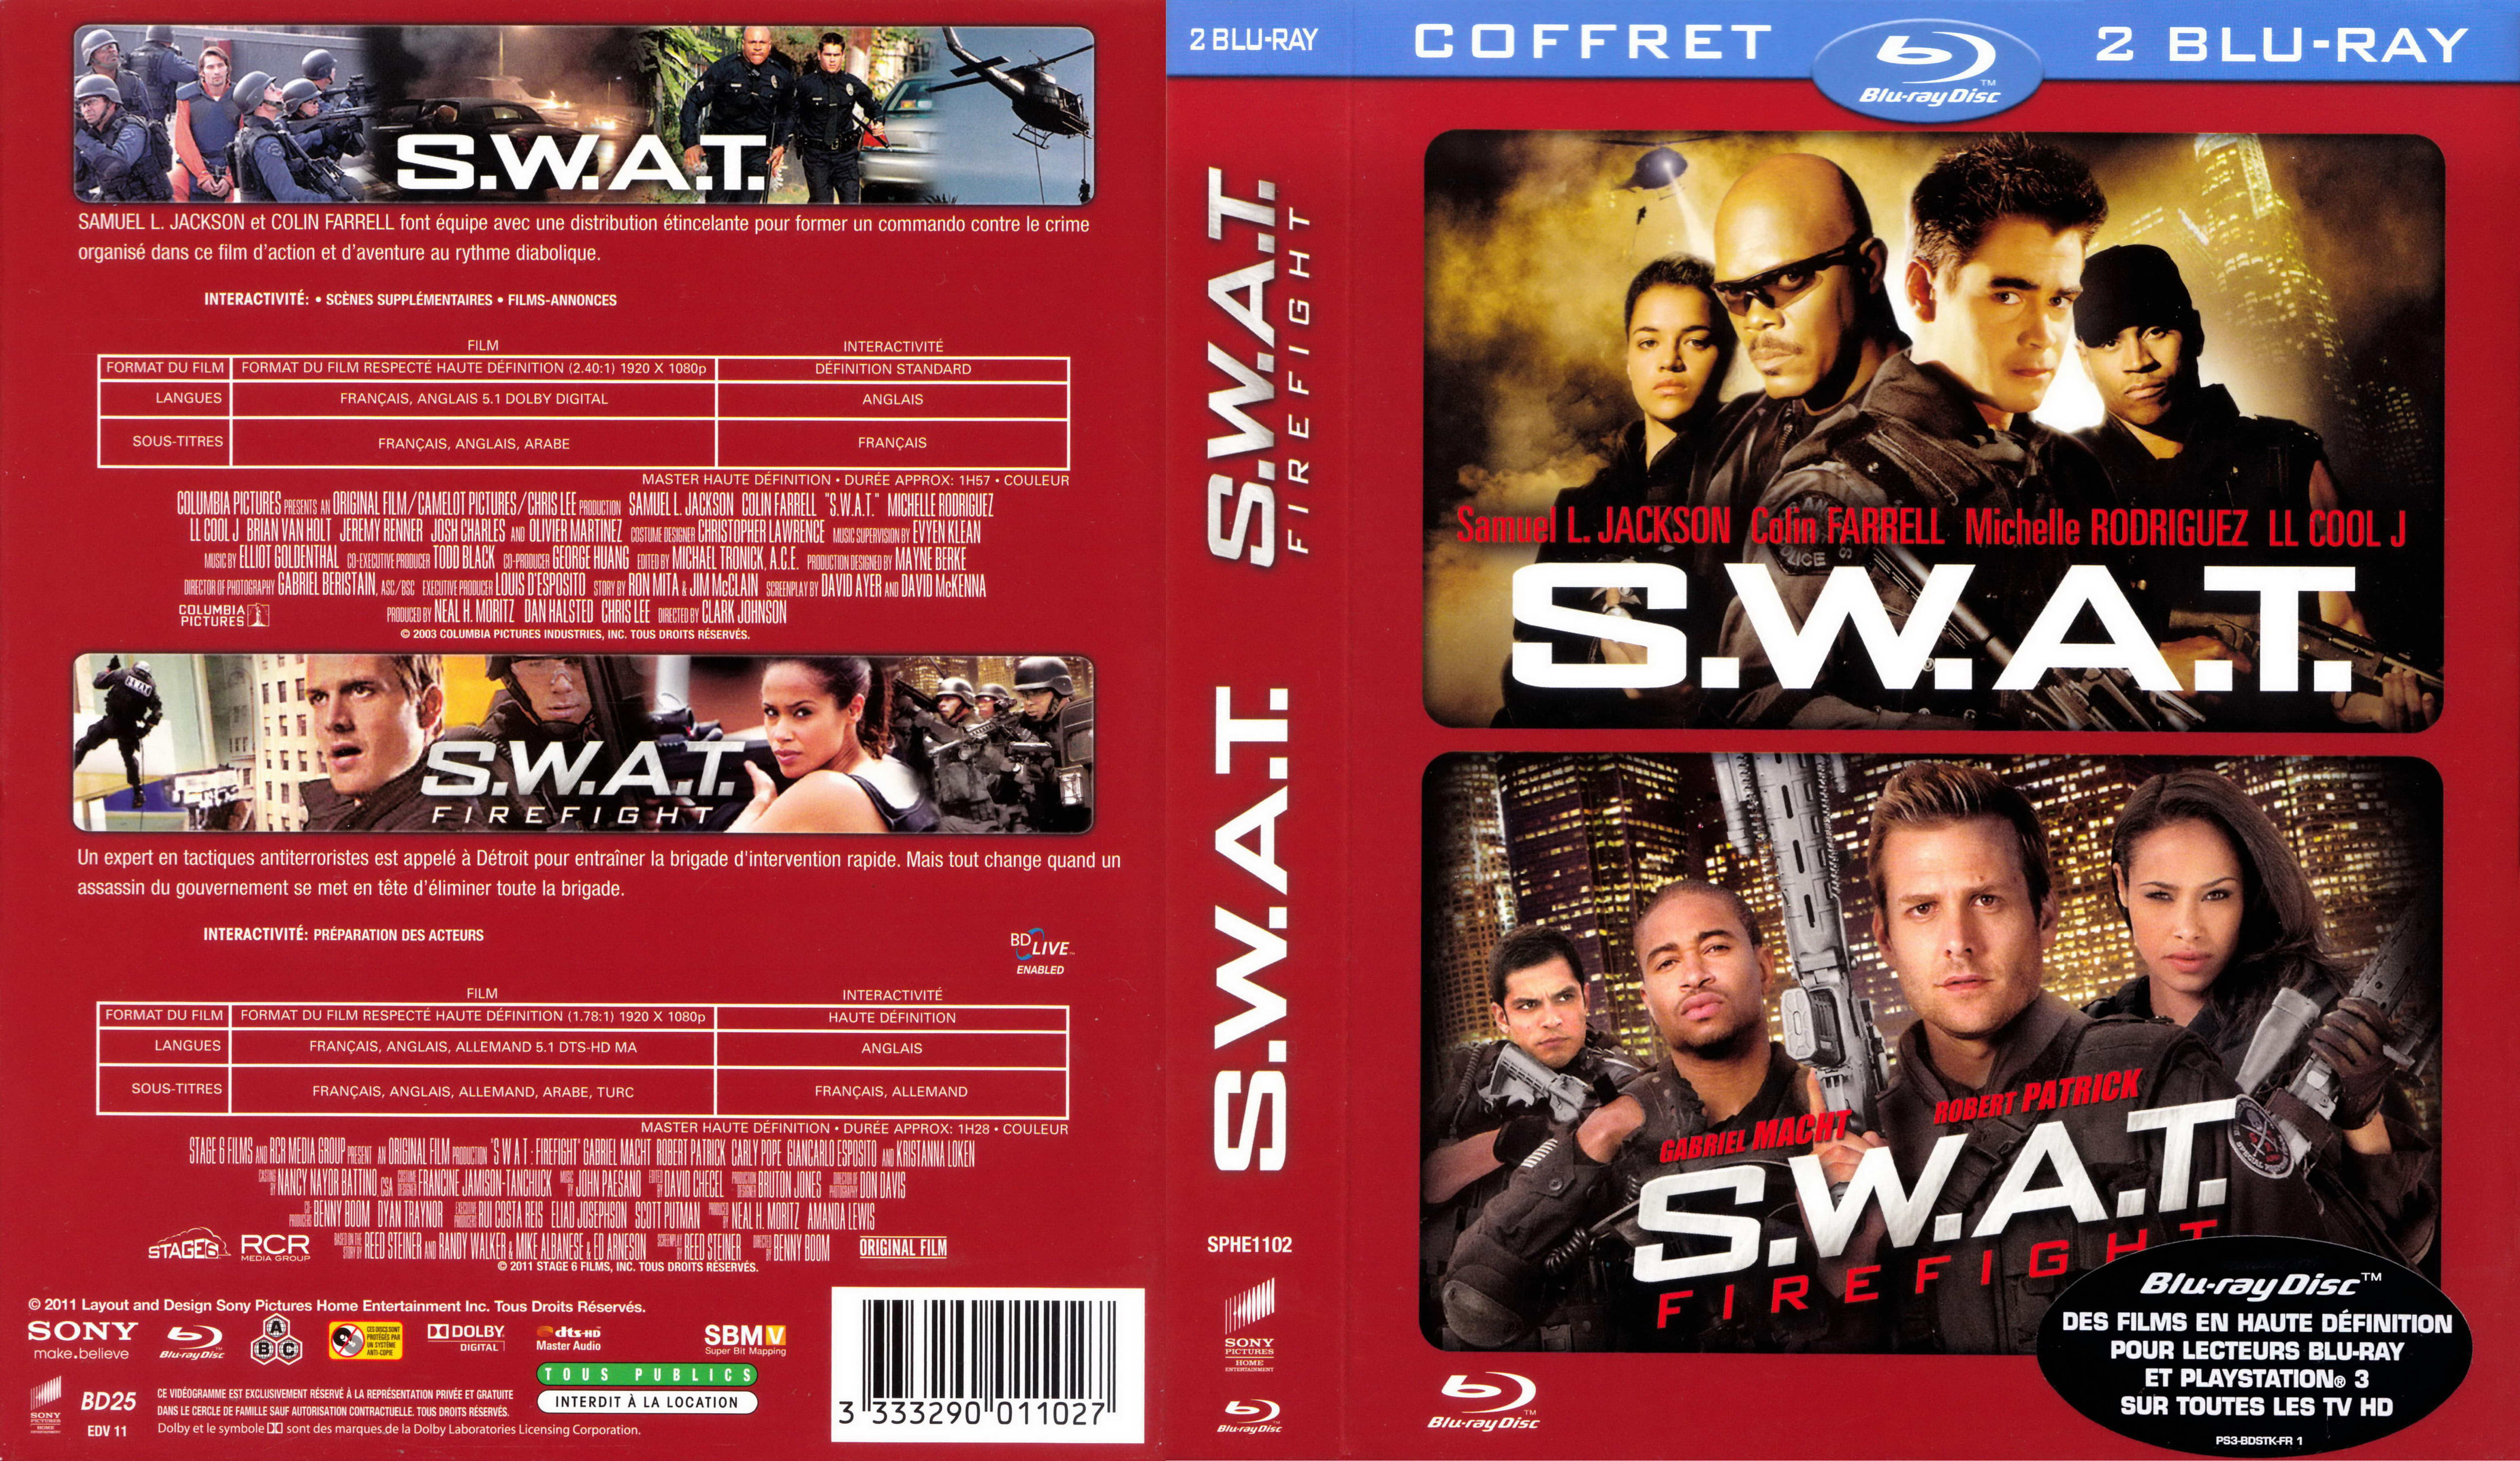 Jaquette DVD Swat 1 et 2 (BLU-RAY)